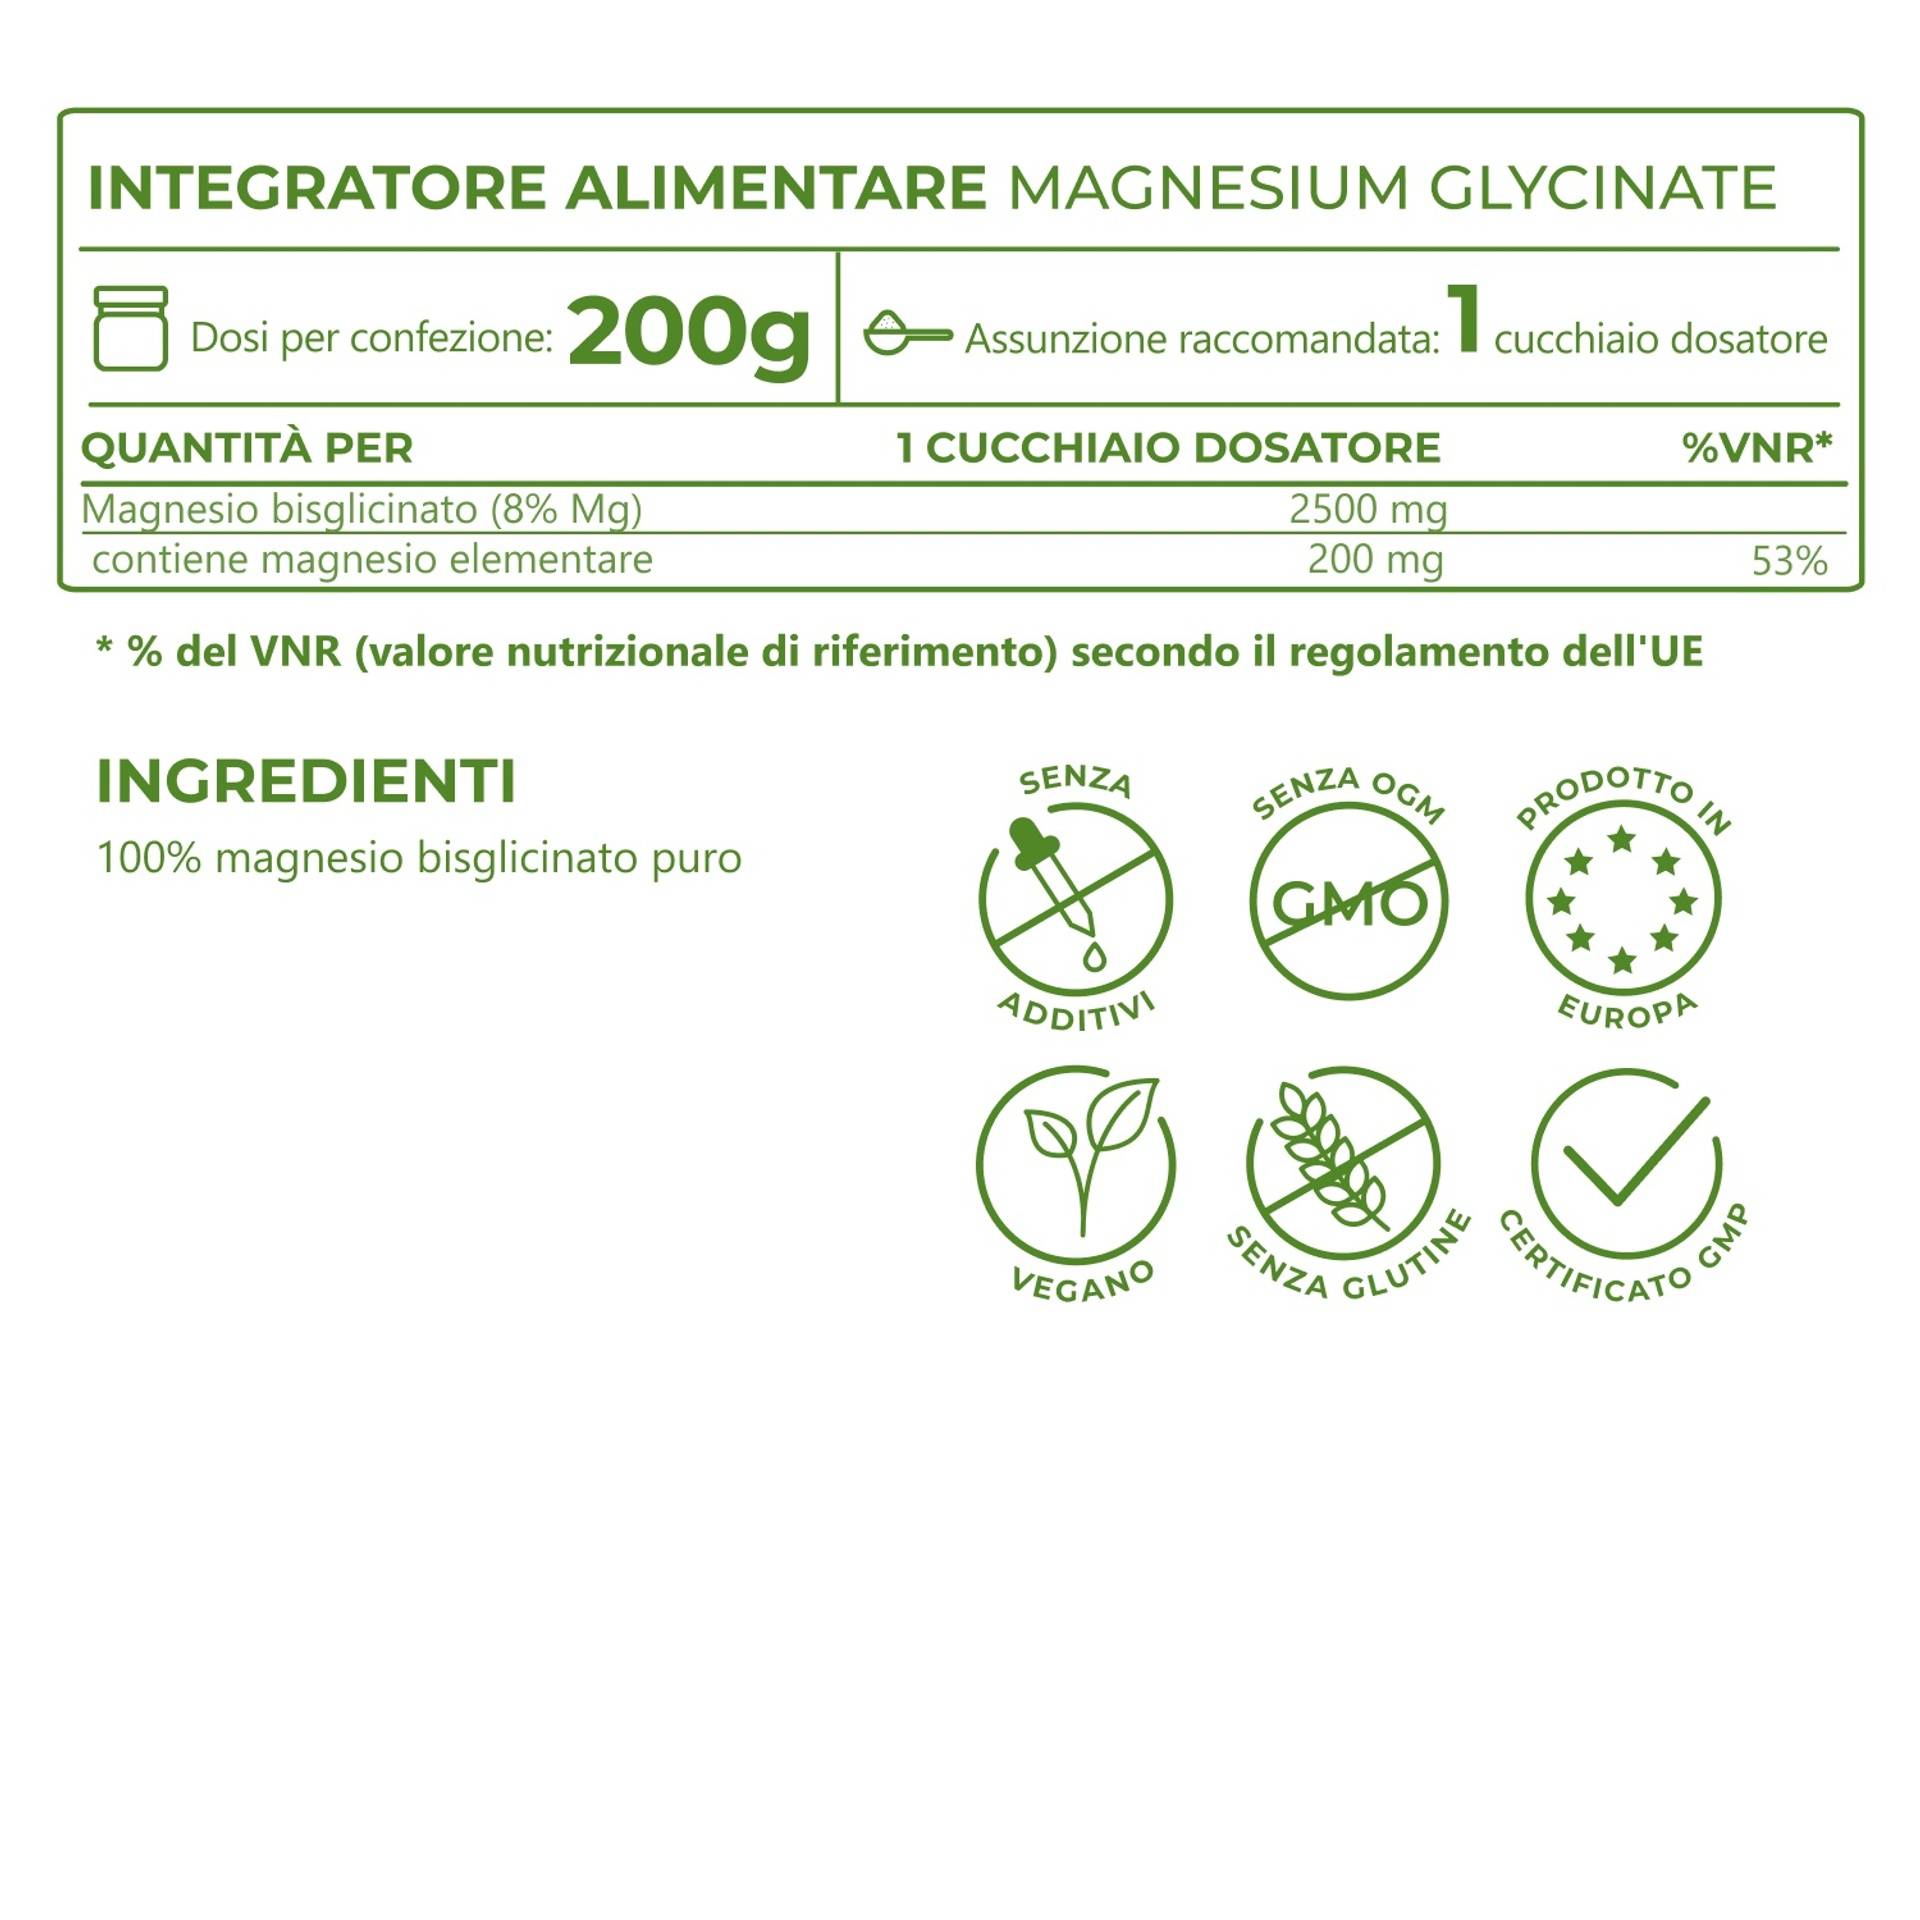 5_Ingredients_Magnesium Glycinat Powder_6973-0C_IT.png